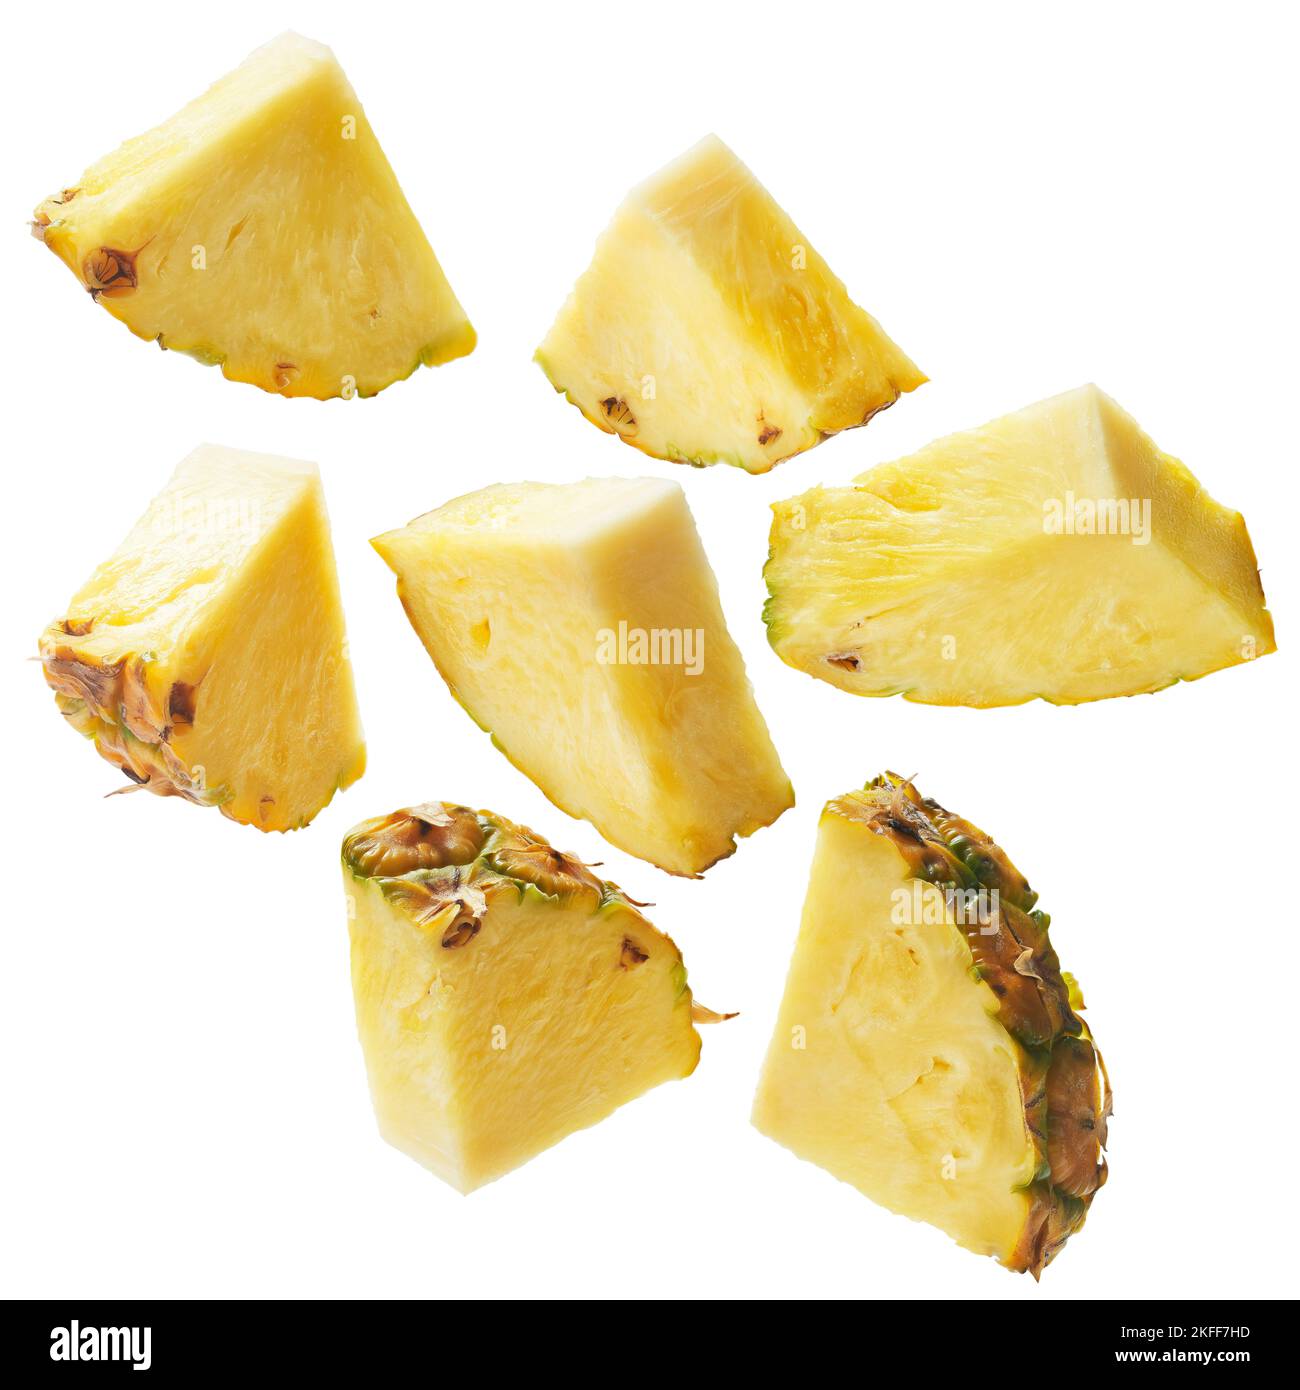 Flying pineapple slices Stock Photo